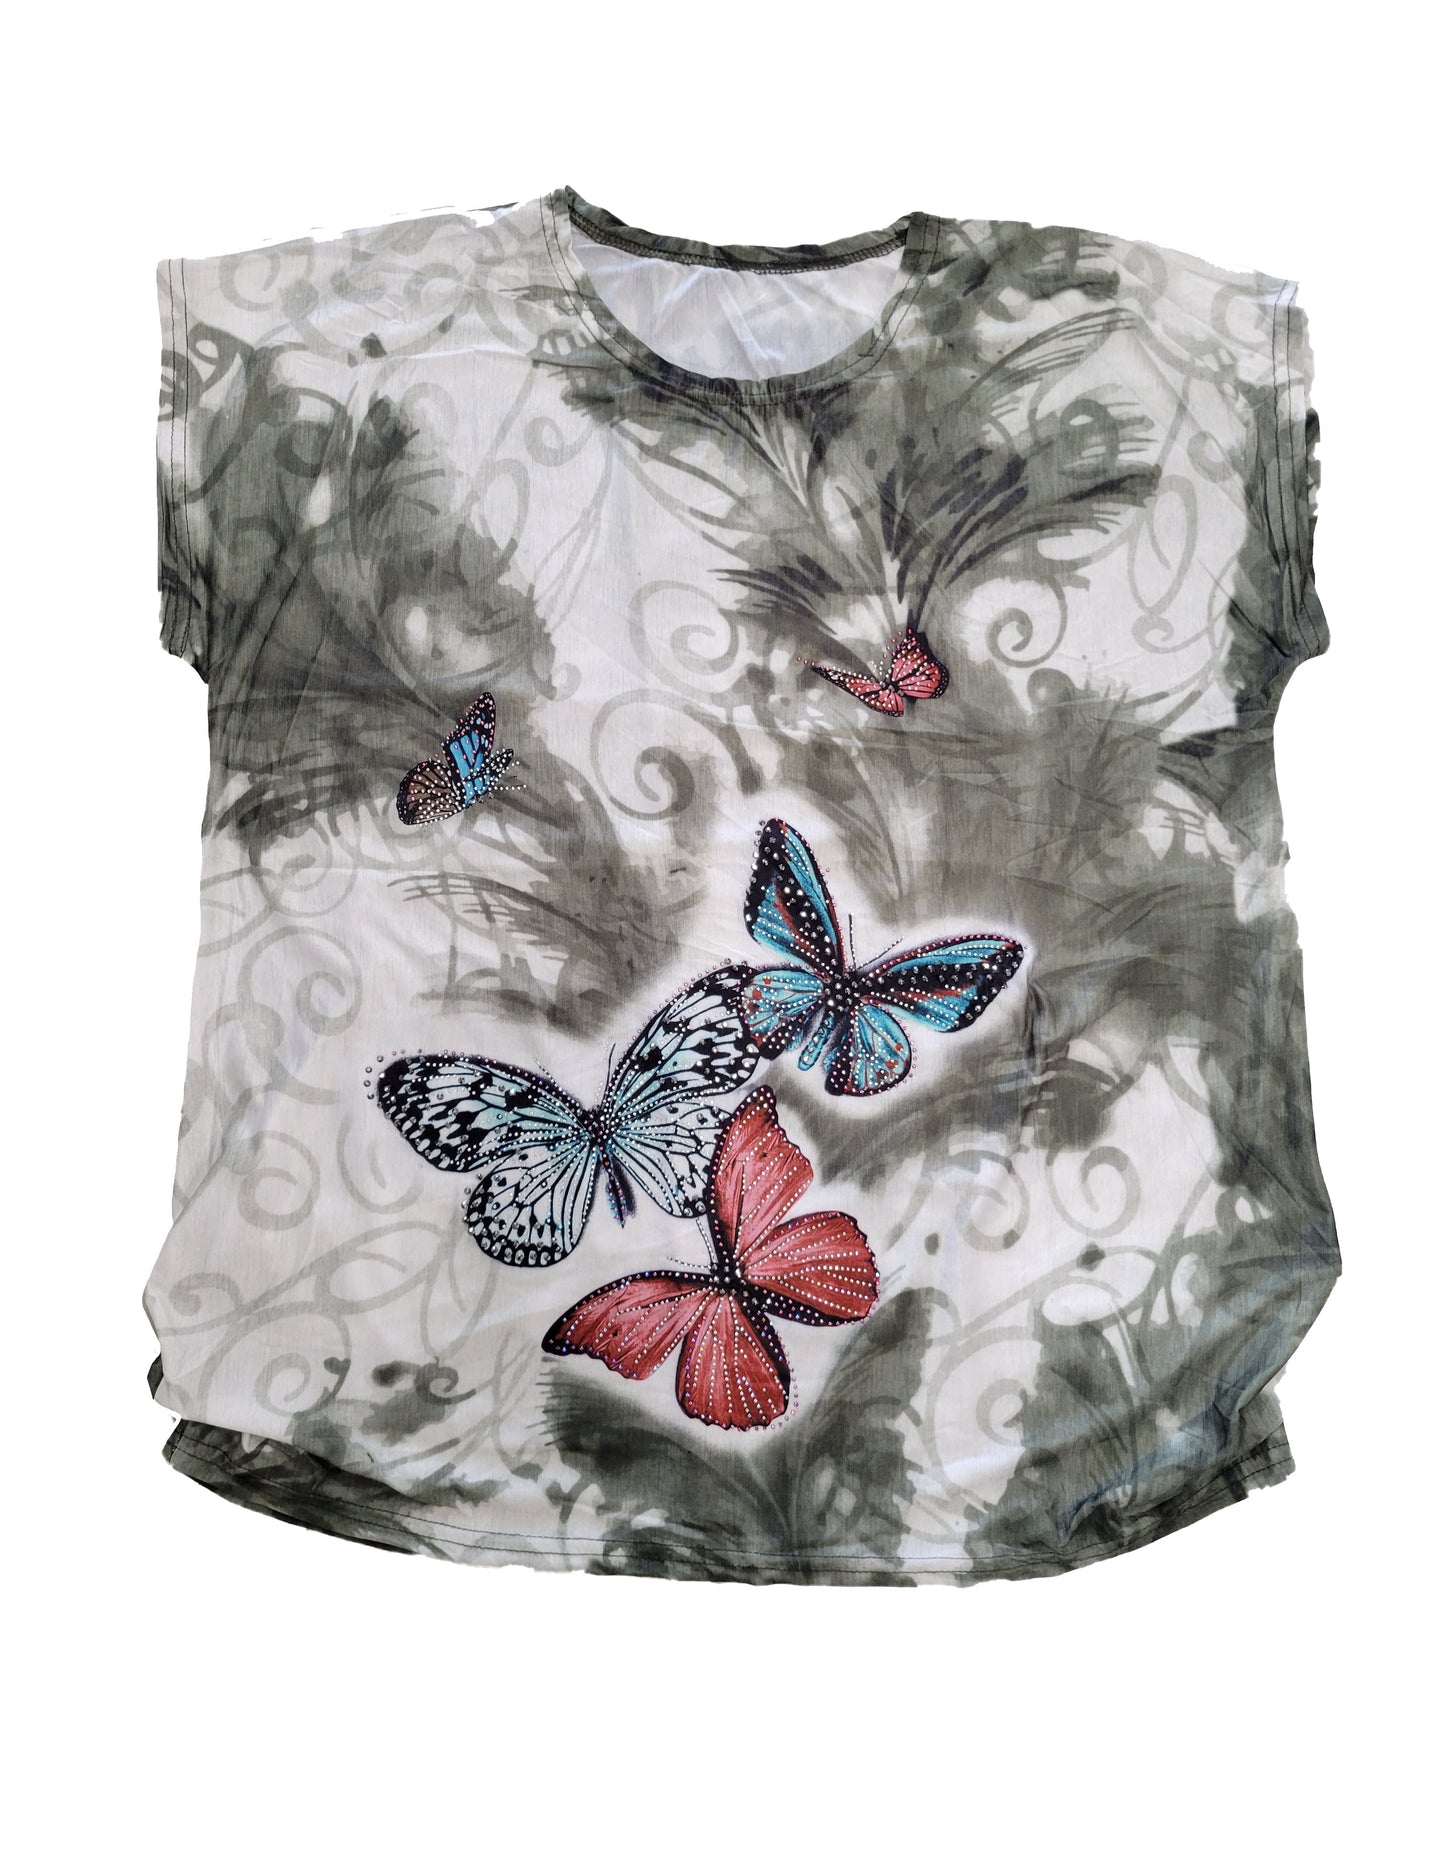 Butterfly Shirt Rhinestone #78-6283